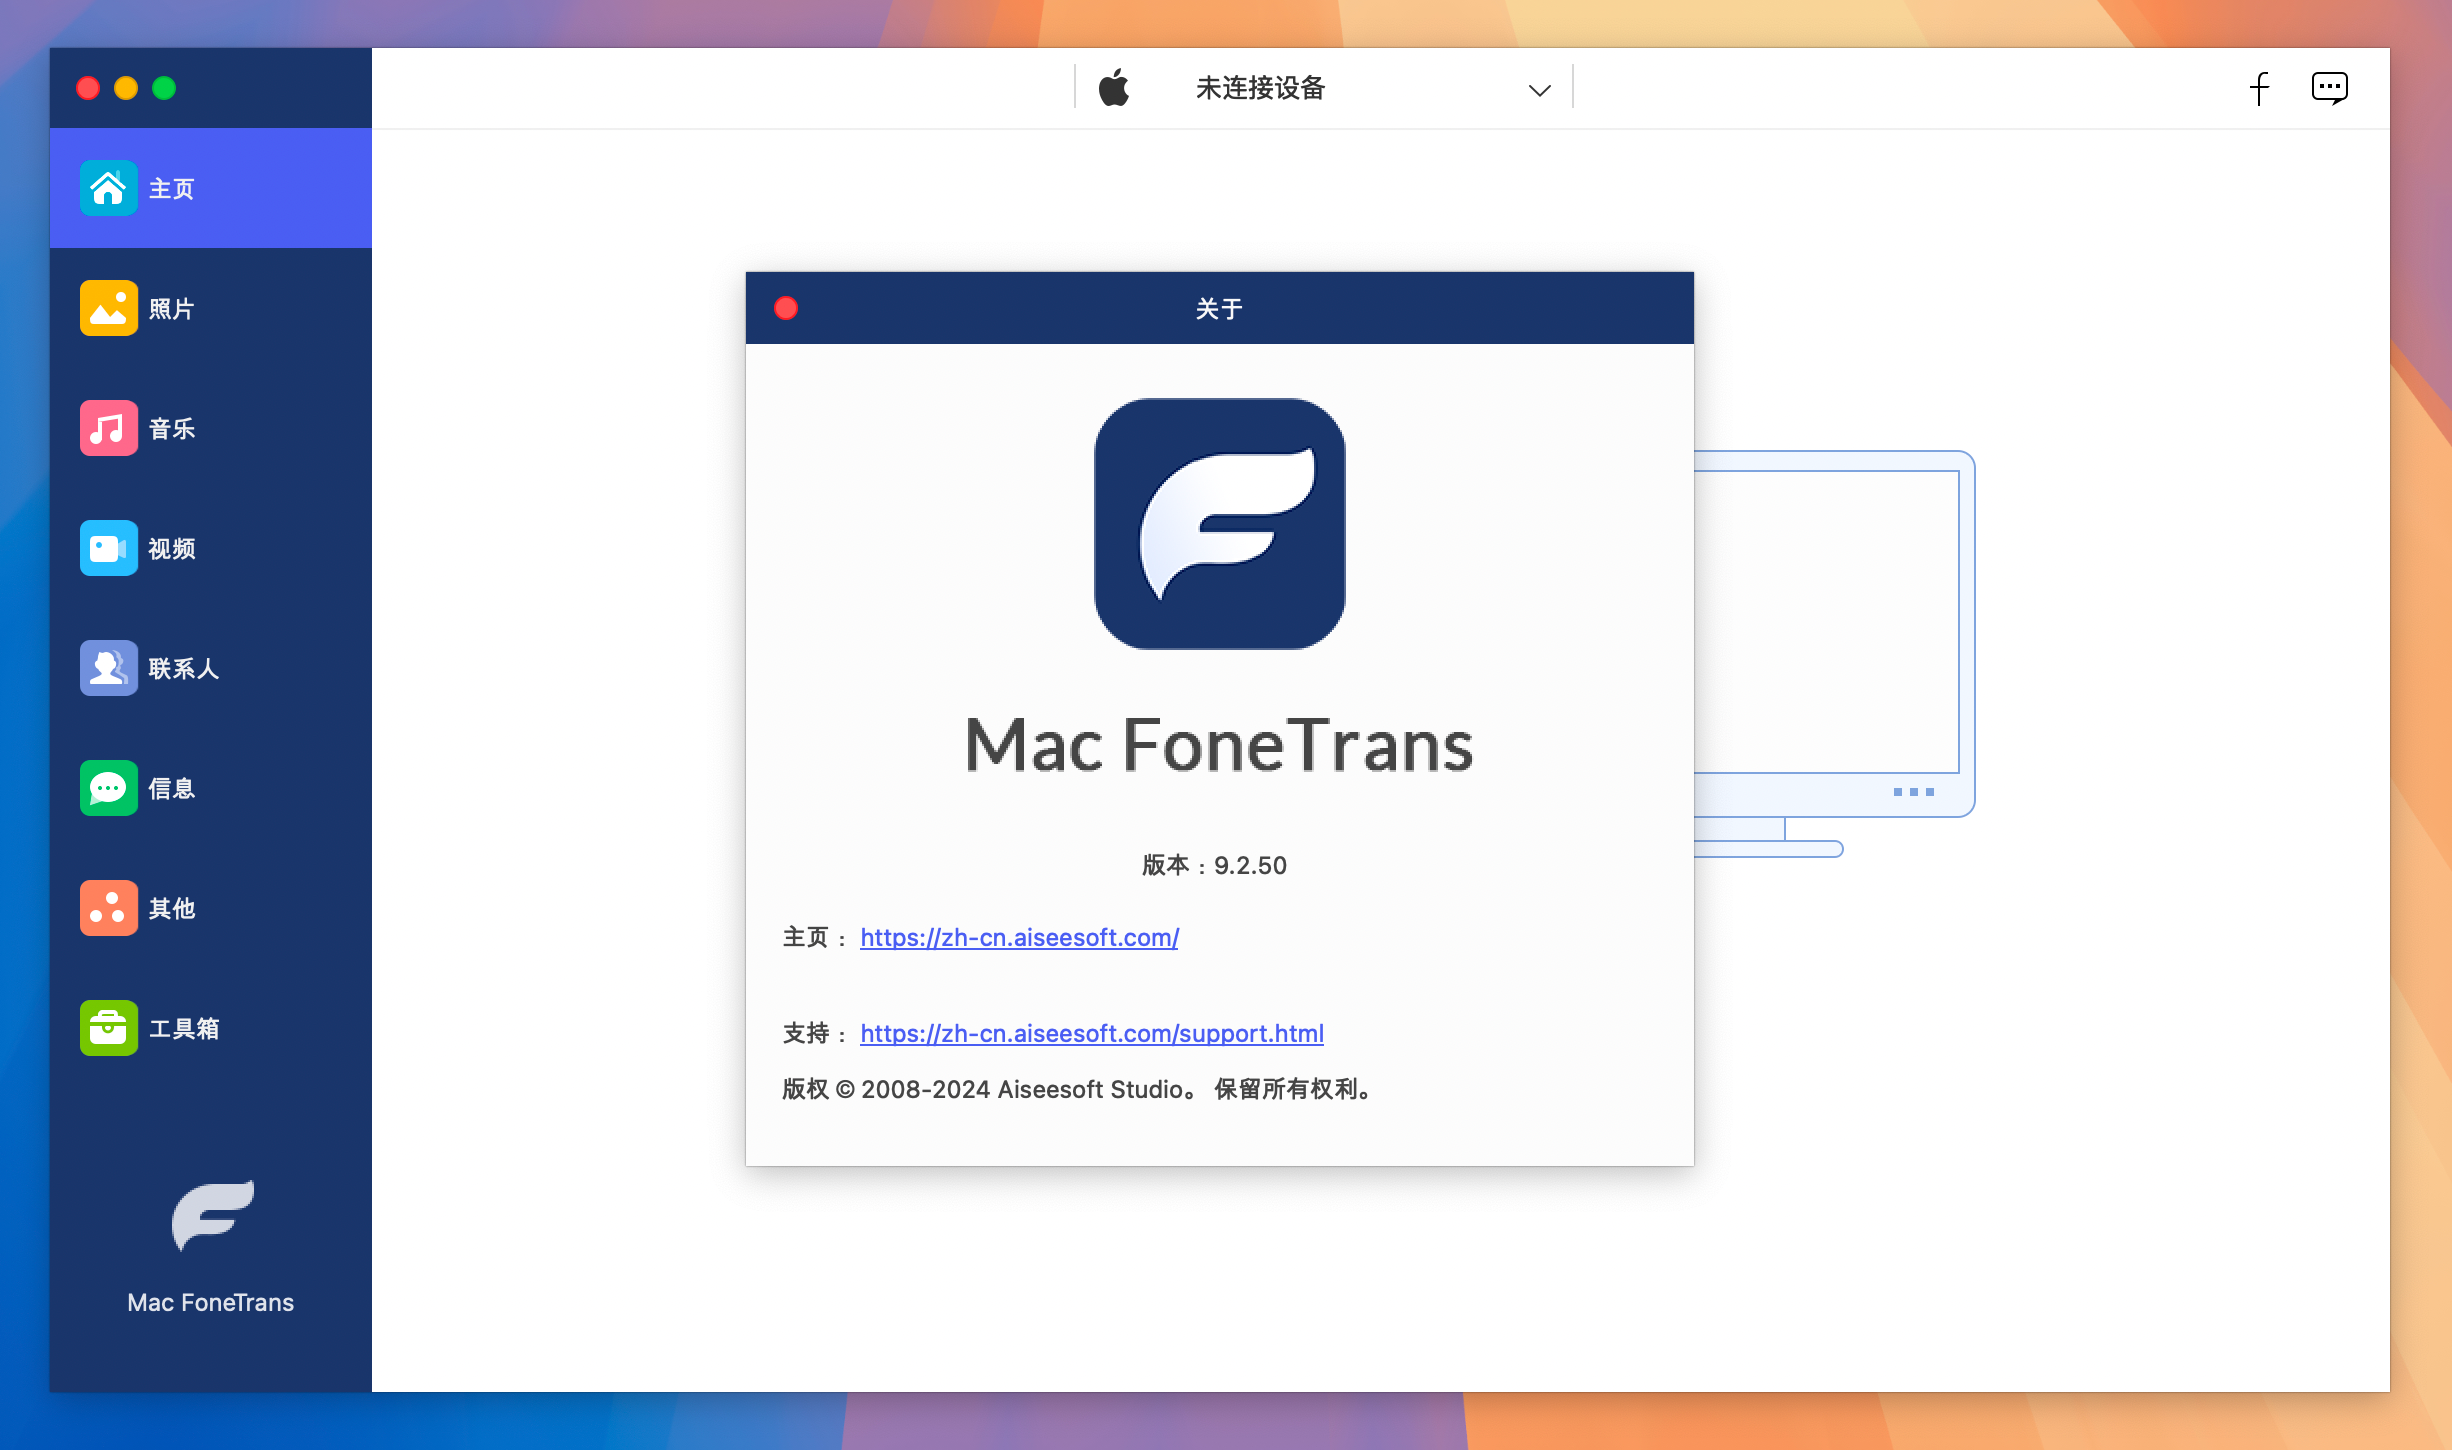 Aiseesoft Mac FoneTrans for Mac v9.2.50 iOS文件传输和管理器软件 免激活下载-1